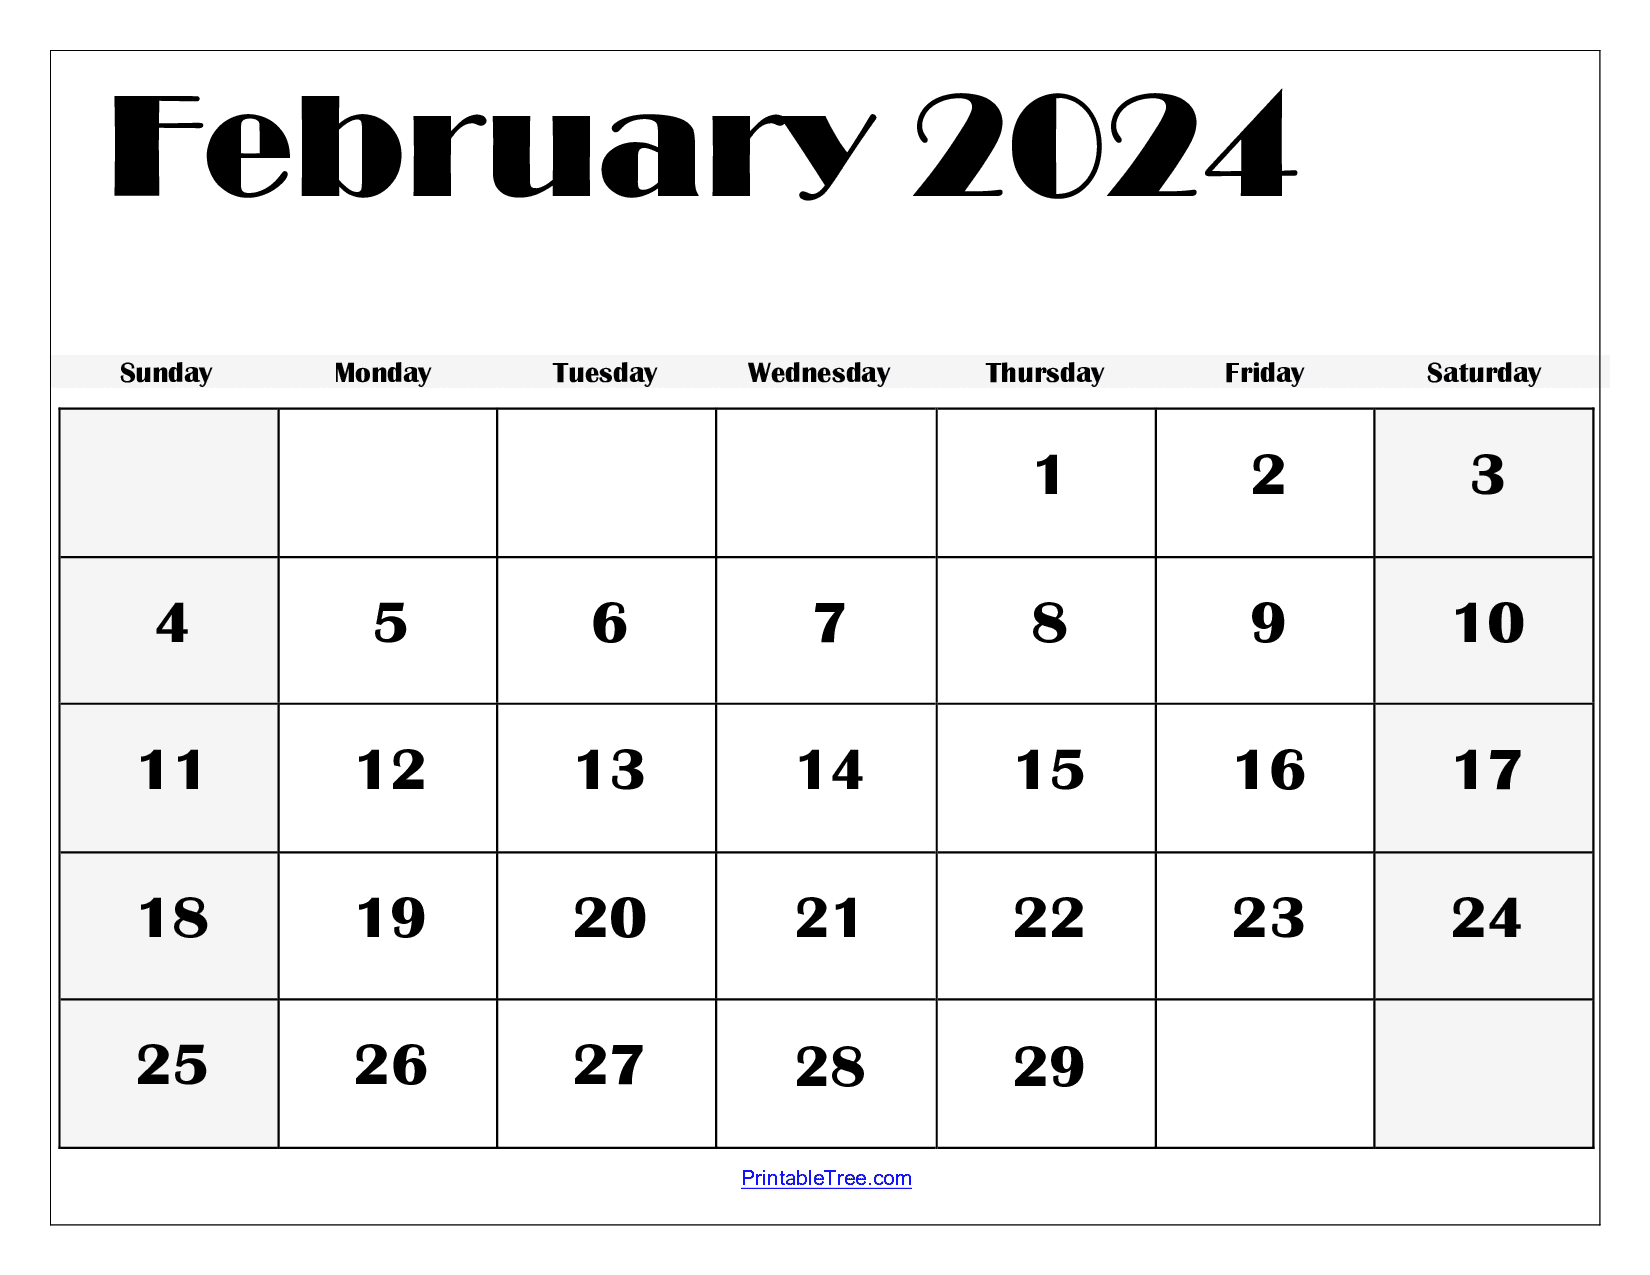 February 2024 Calendar Printable Pdf Template With Holidays for Printable February 2024 Calendar